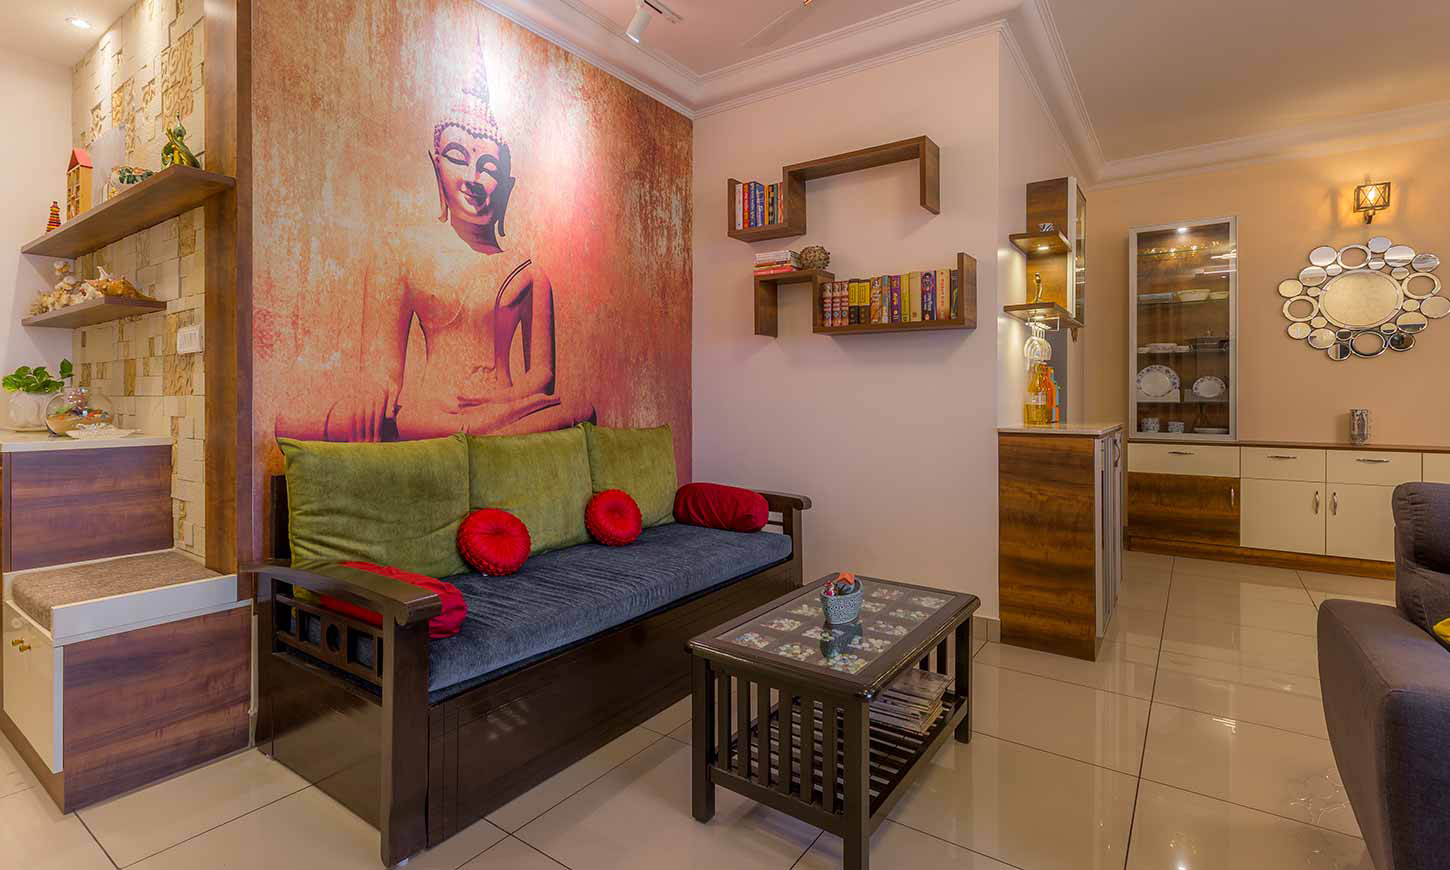 Living room interior designed by budget interior designers in bangalore